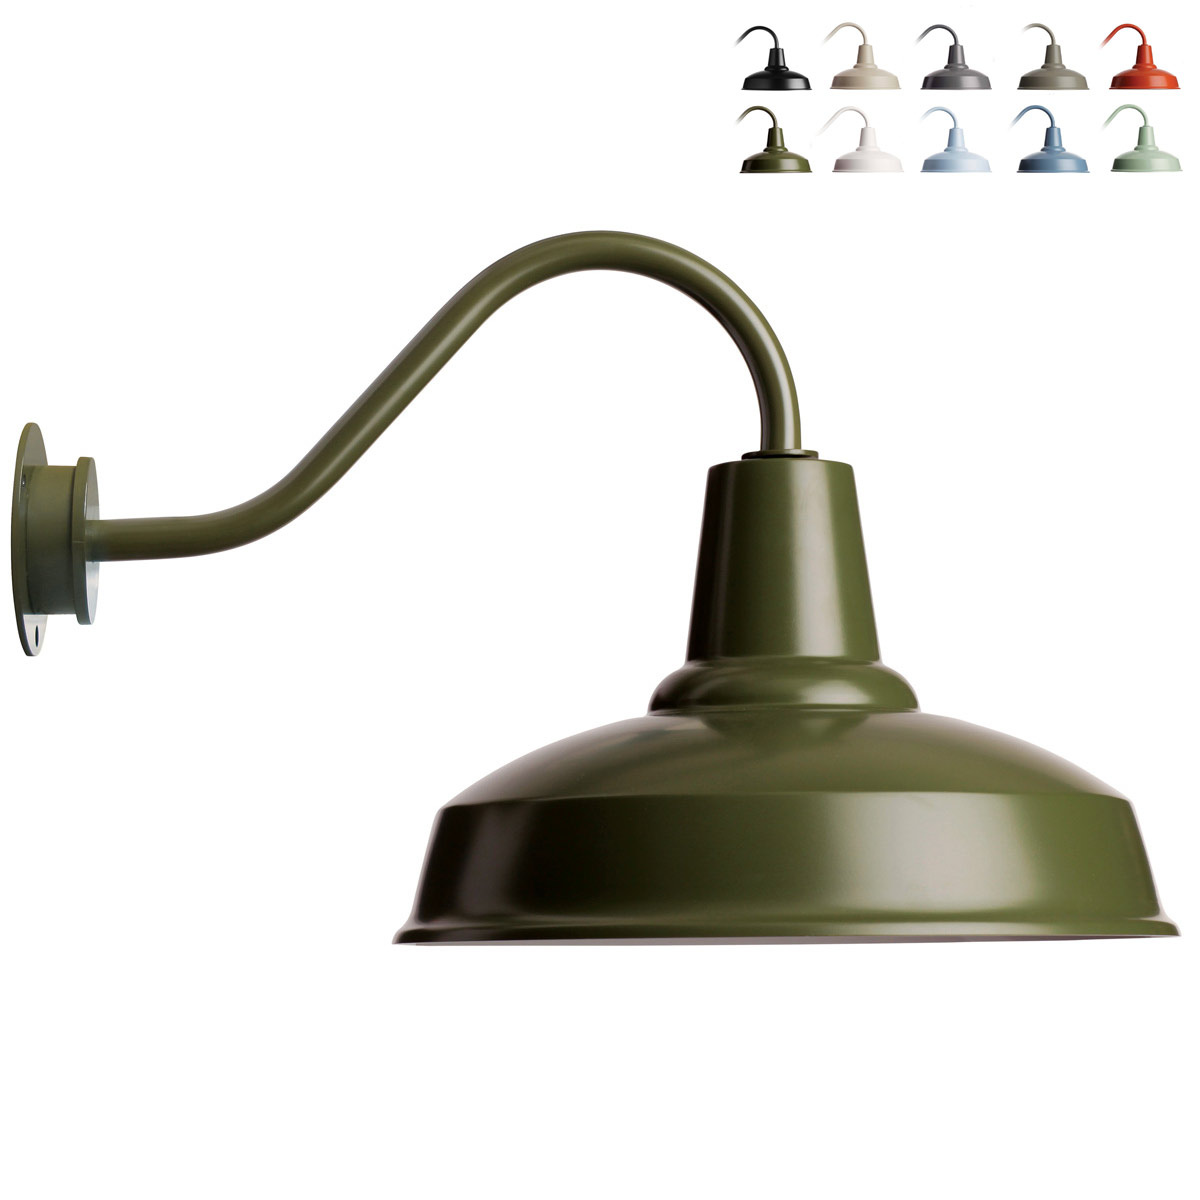 BARN LAMP: Klassische Schwanenhals-Wandleuchte aus Aluminium: Klassische, traditionelle Schwanenhals-Wandleuchte „Barn Lamp“ hier in olivgrün (großes Modell)